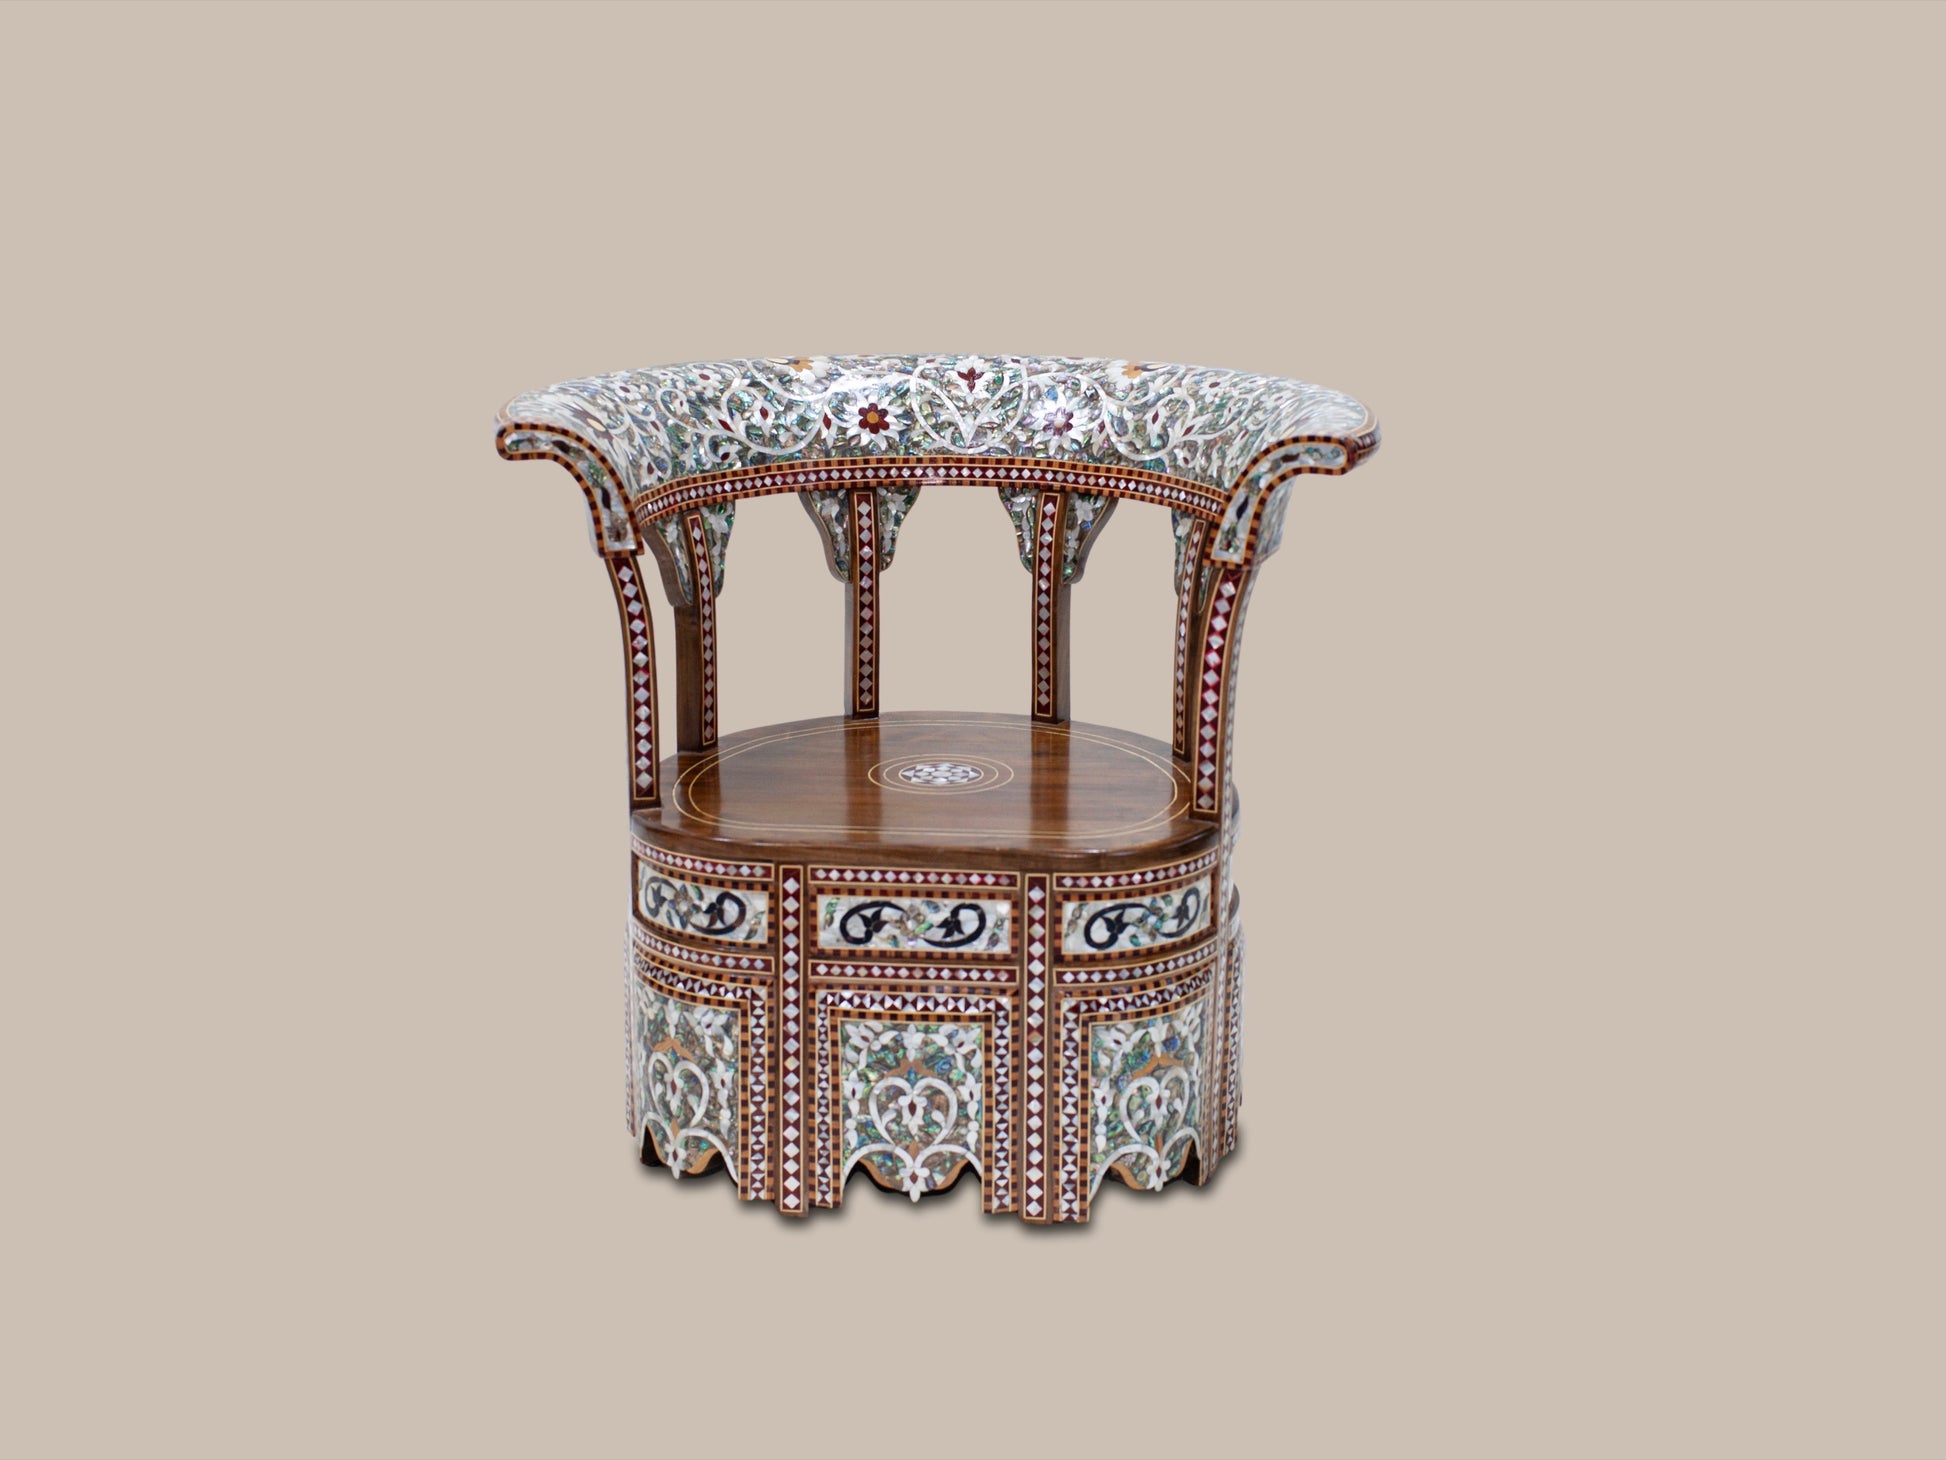 Emperor Chair & Vase Set - Mother Pearl